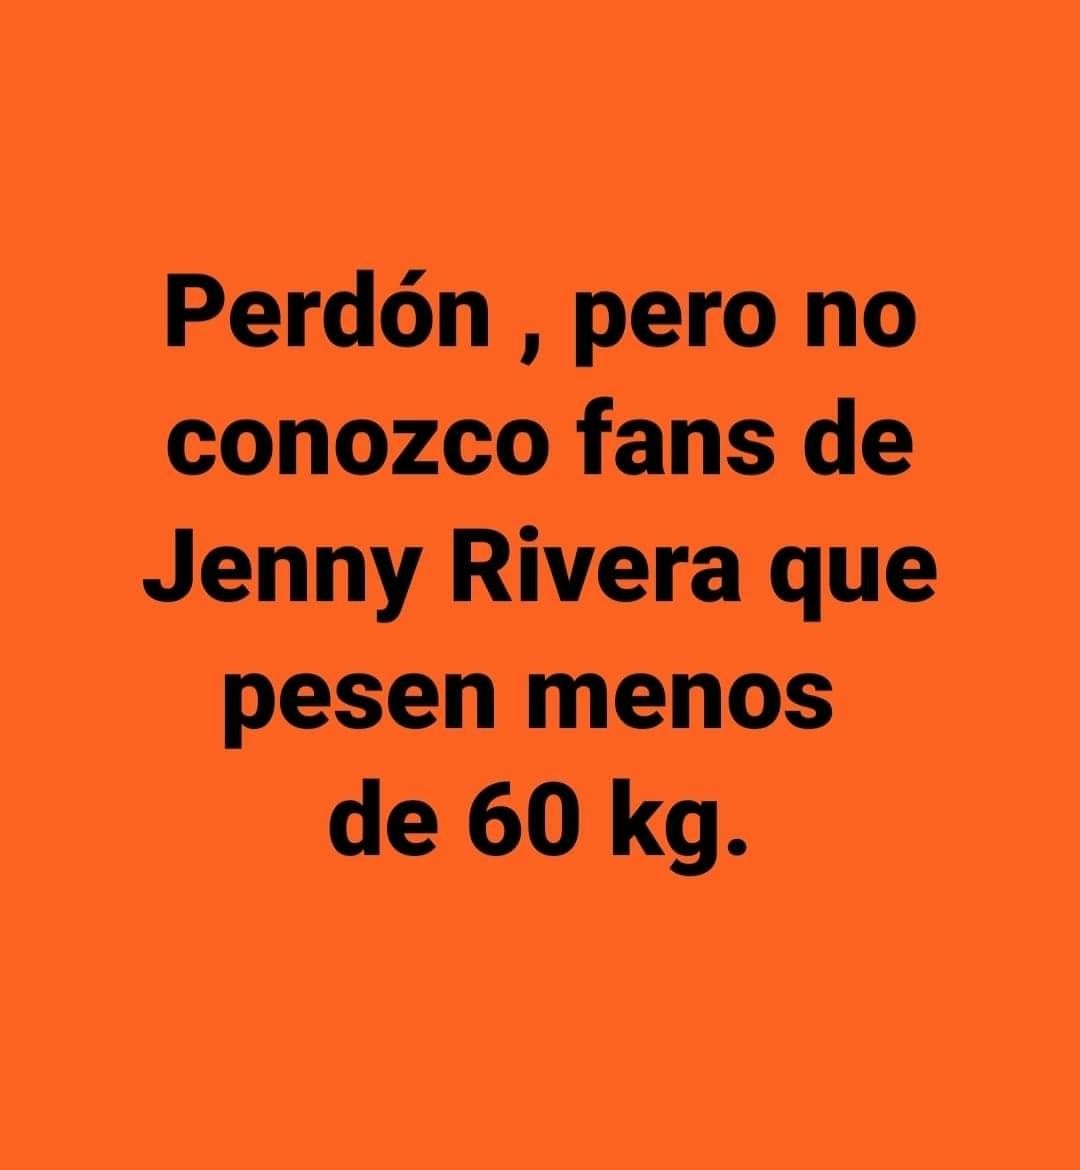 Fans de Jenny Rivera